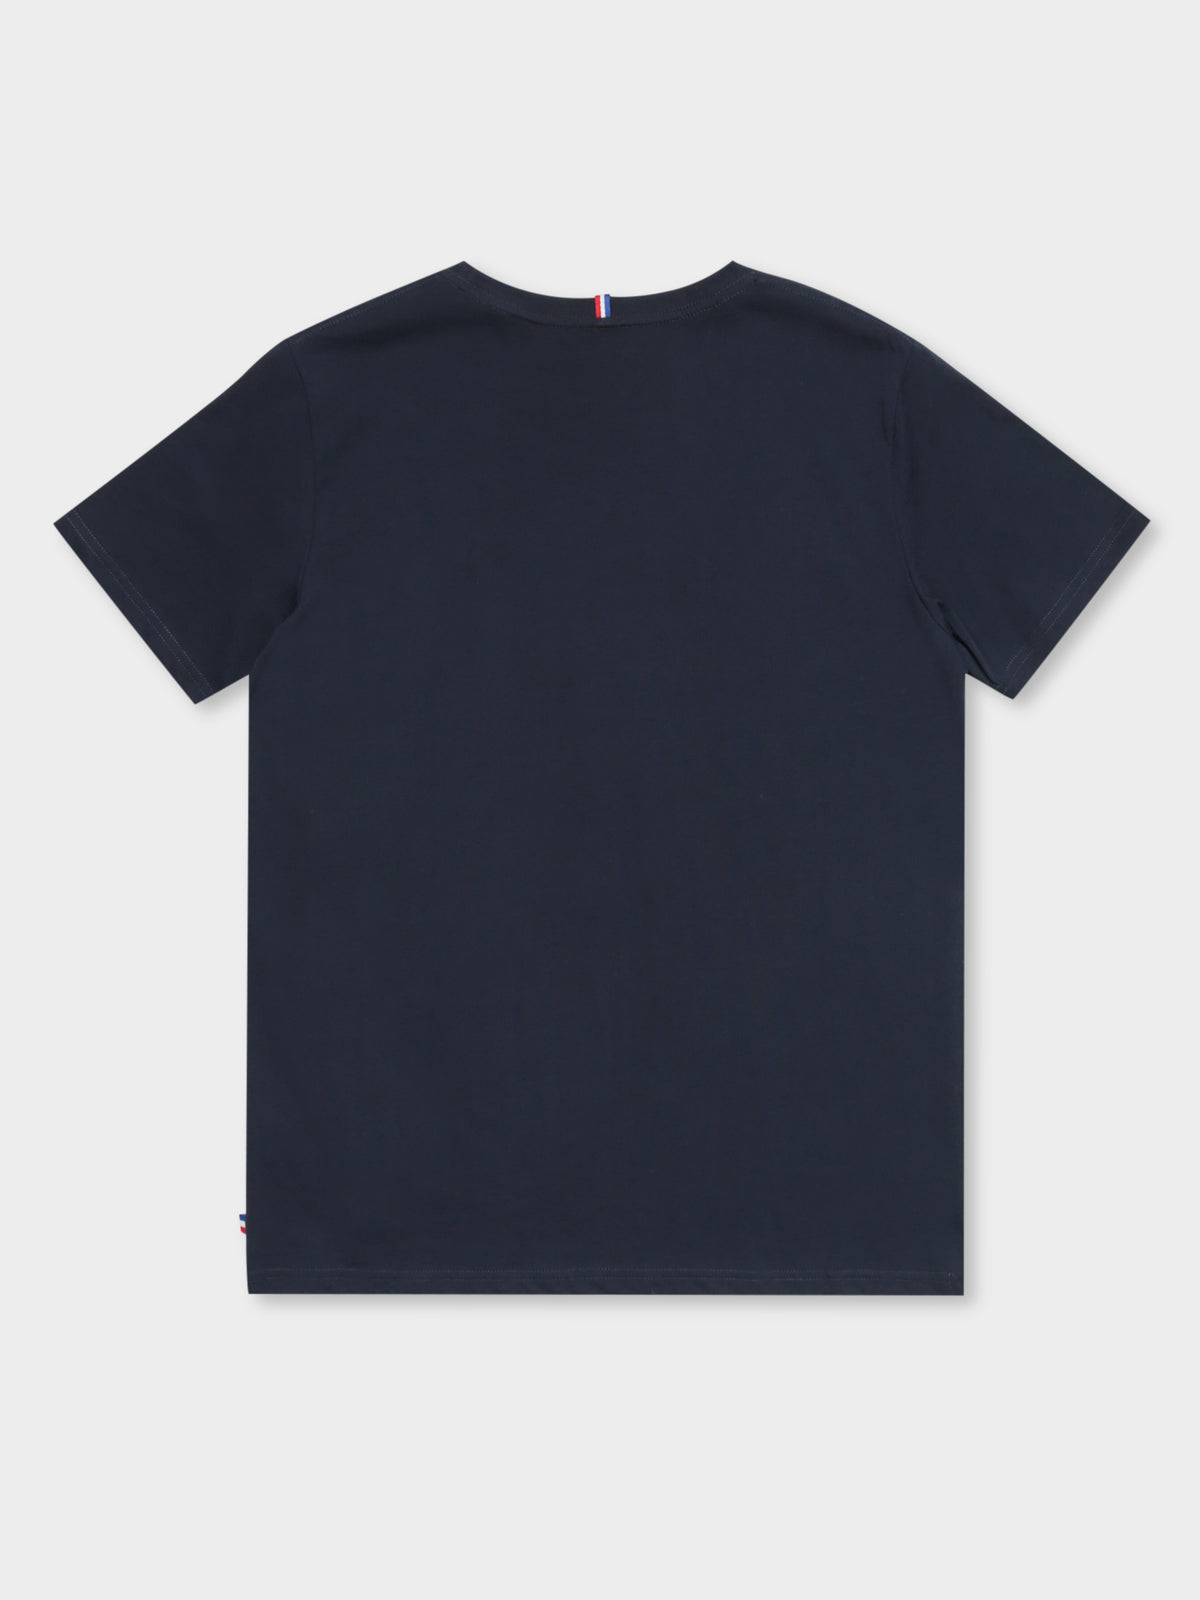 Essential T-Shirt in Dress Blues